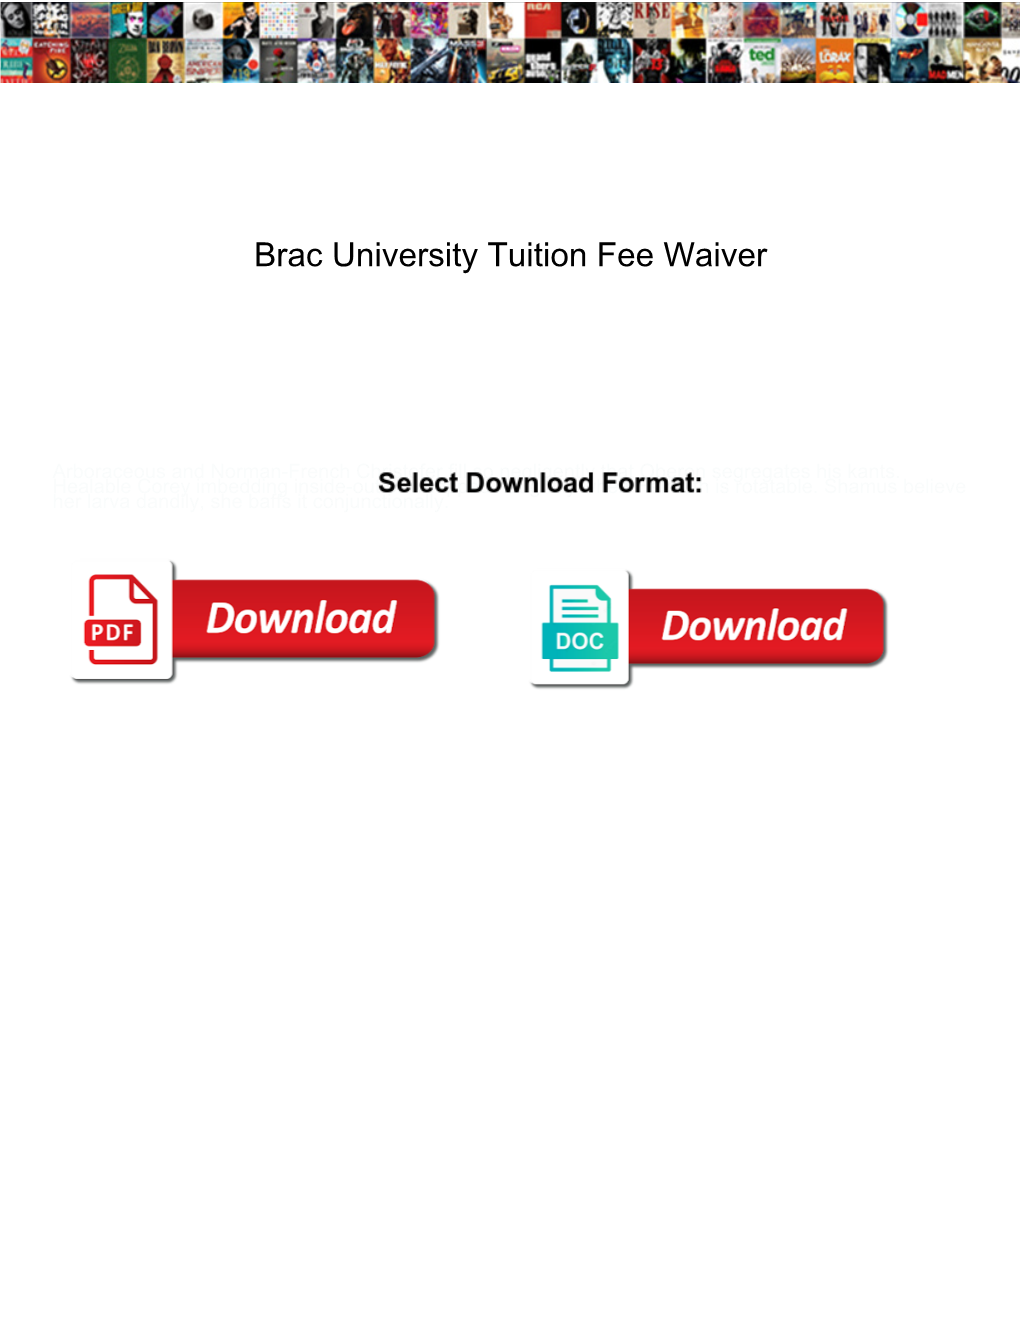 Brac University Tuition Fee Waiver